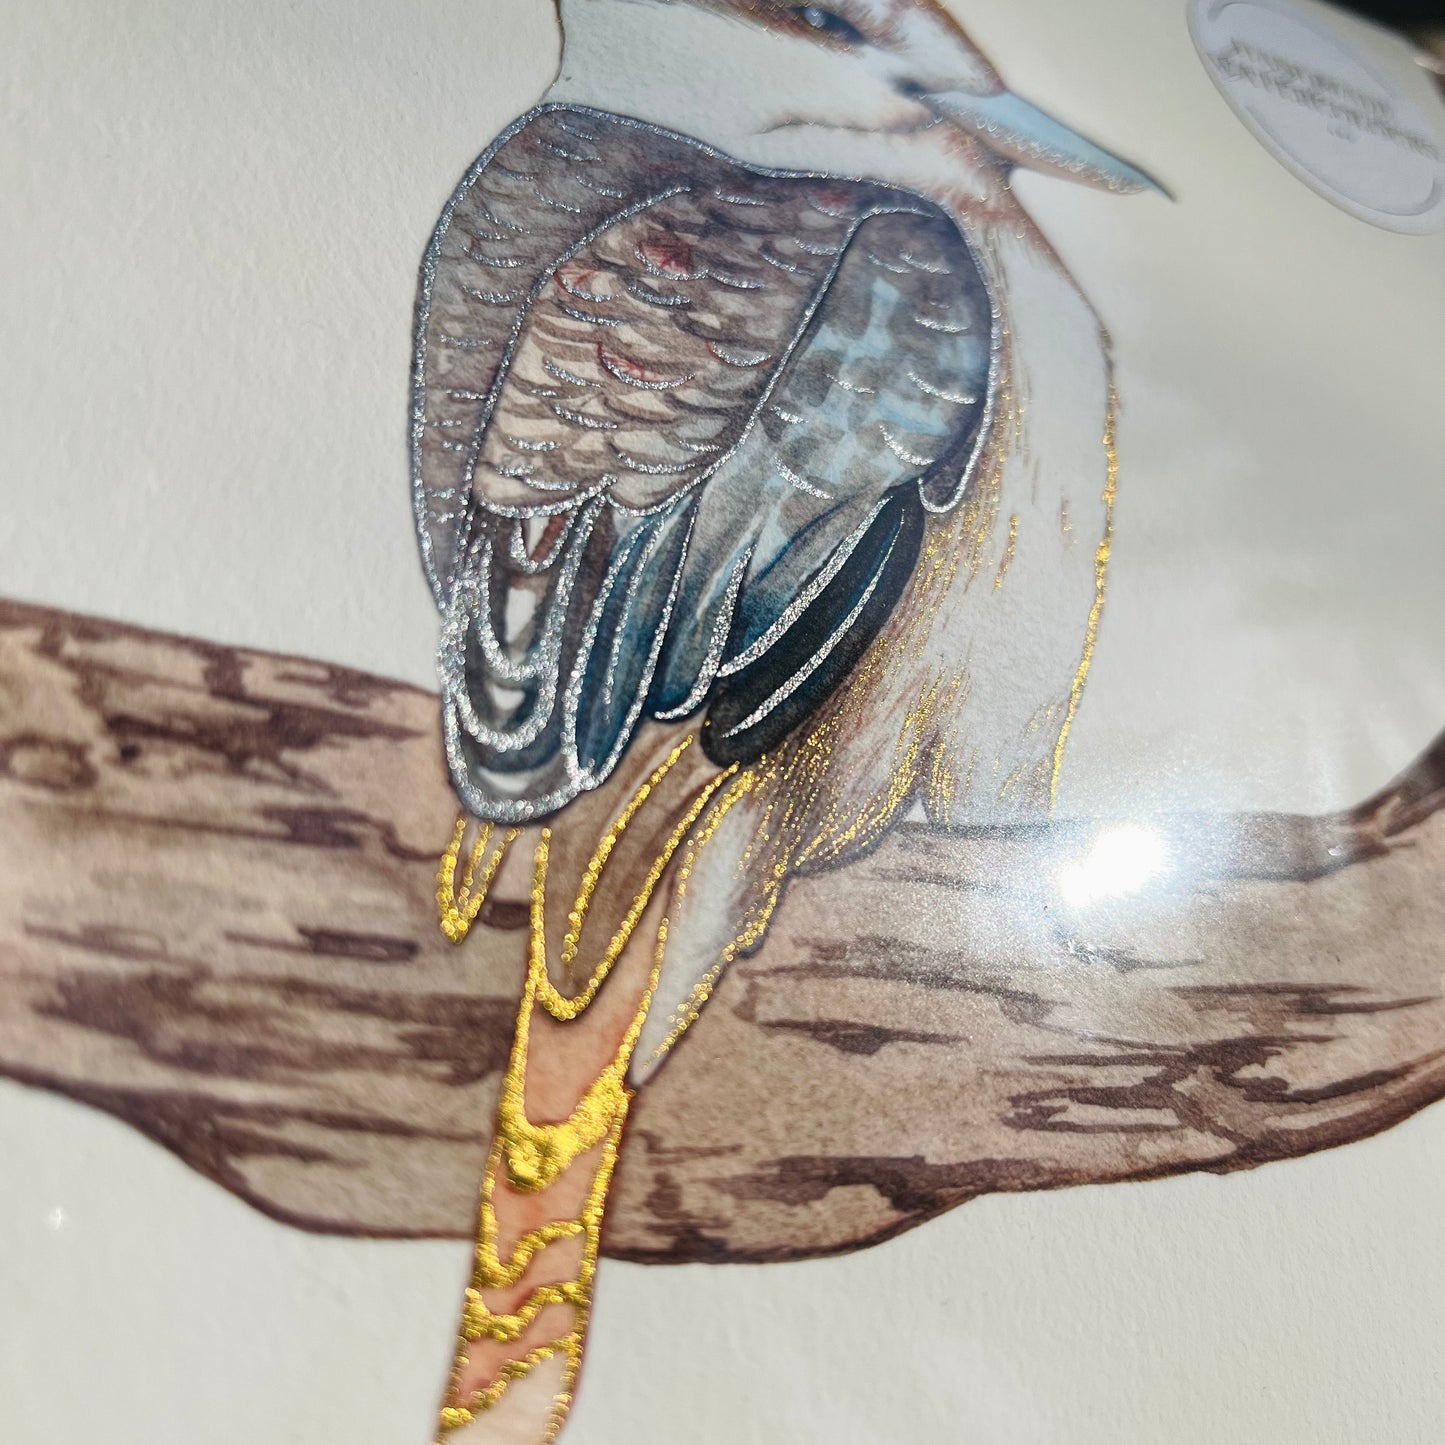 Electric Kookaburra Watercolour Illustration Print